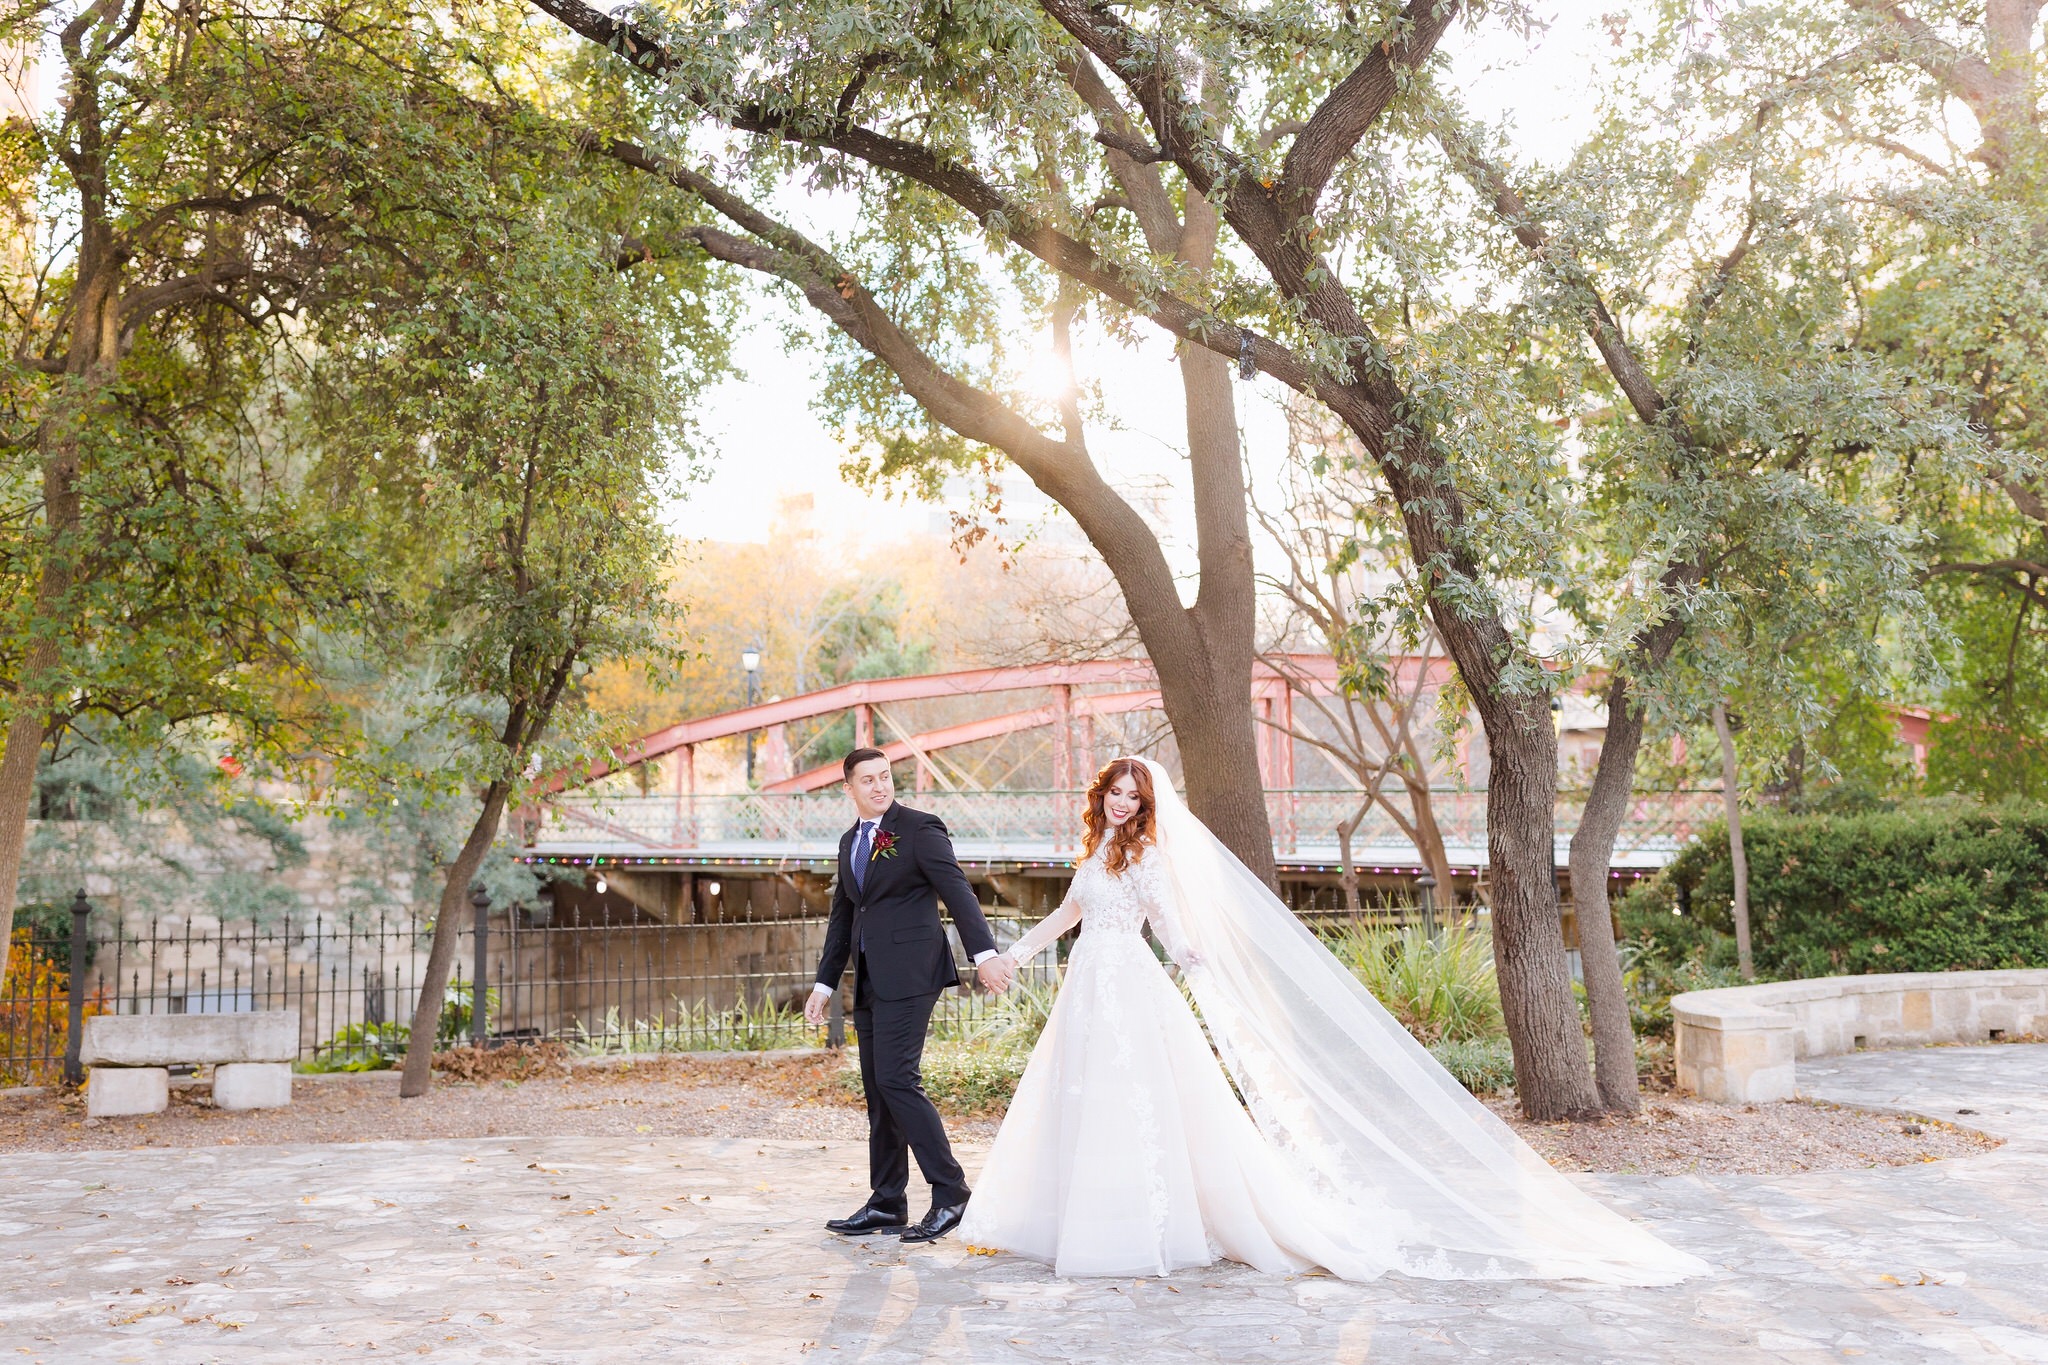 A Turquoise, Magenta & Gold Wedding at Southwest School of Art in San Antonio, TX by Dawn Elizabeth Studios, San Antonio Wedding Photographer